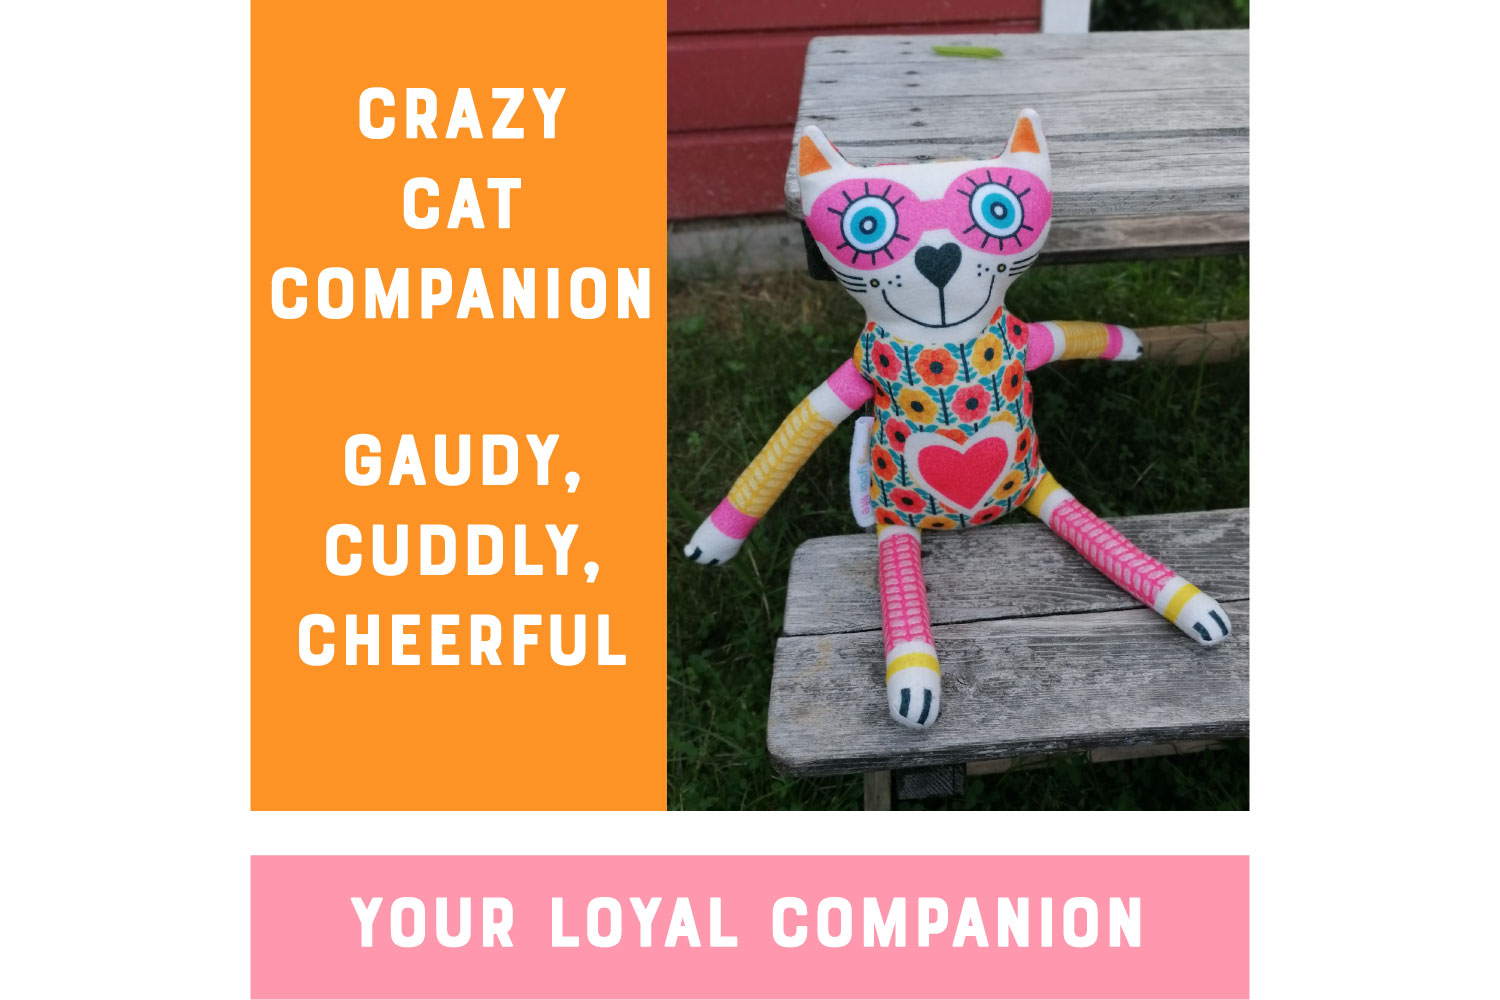 Crazy Cat Companion - your gaudy companion